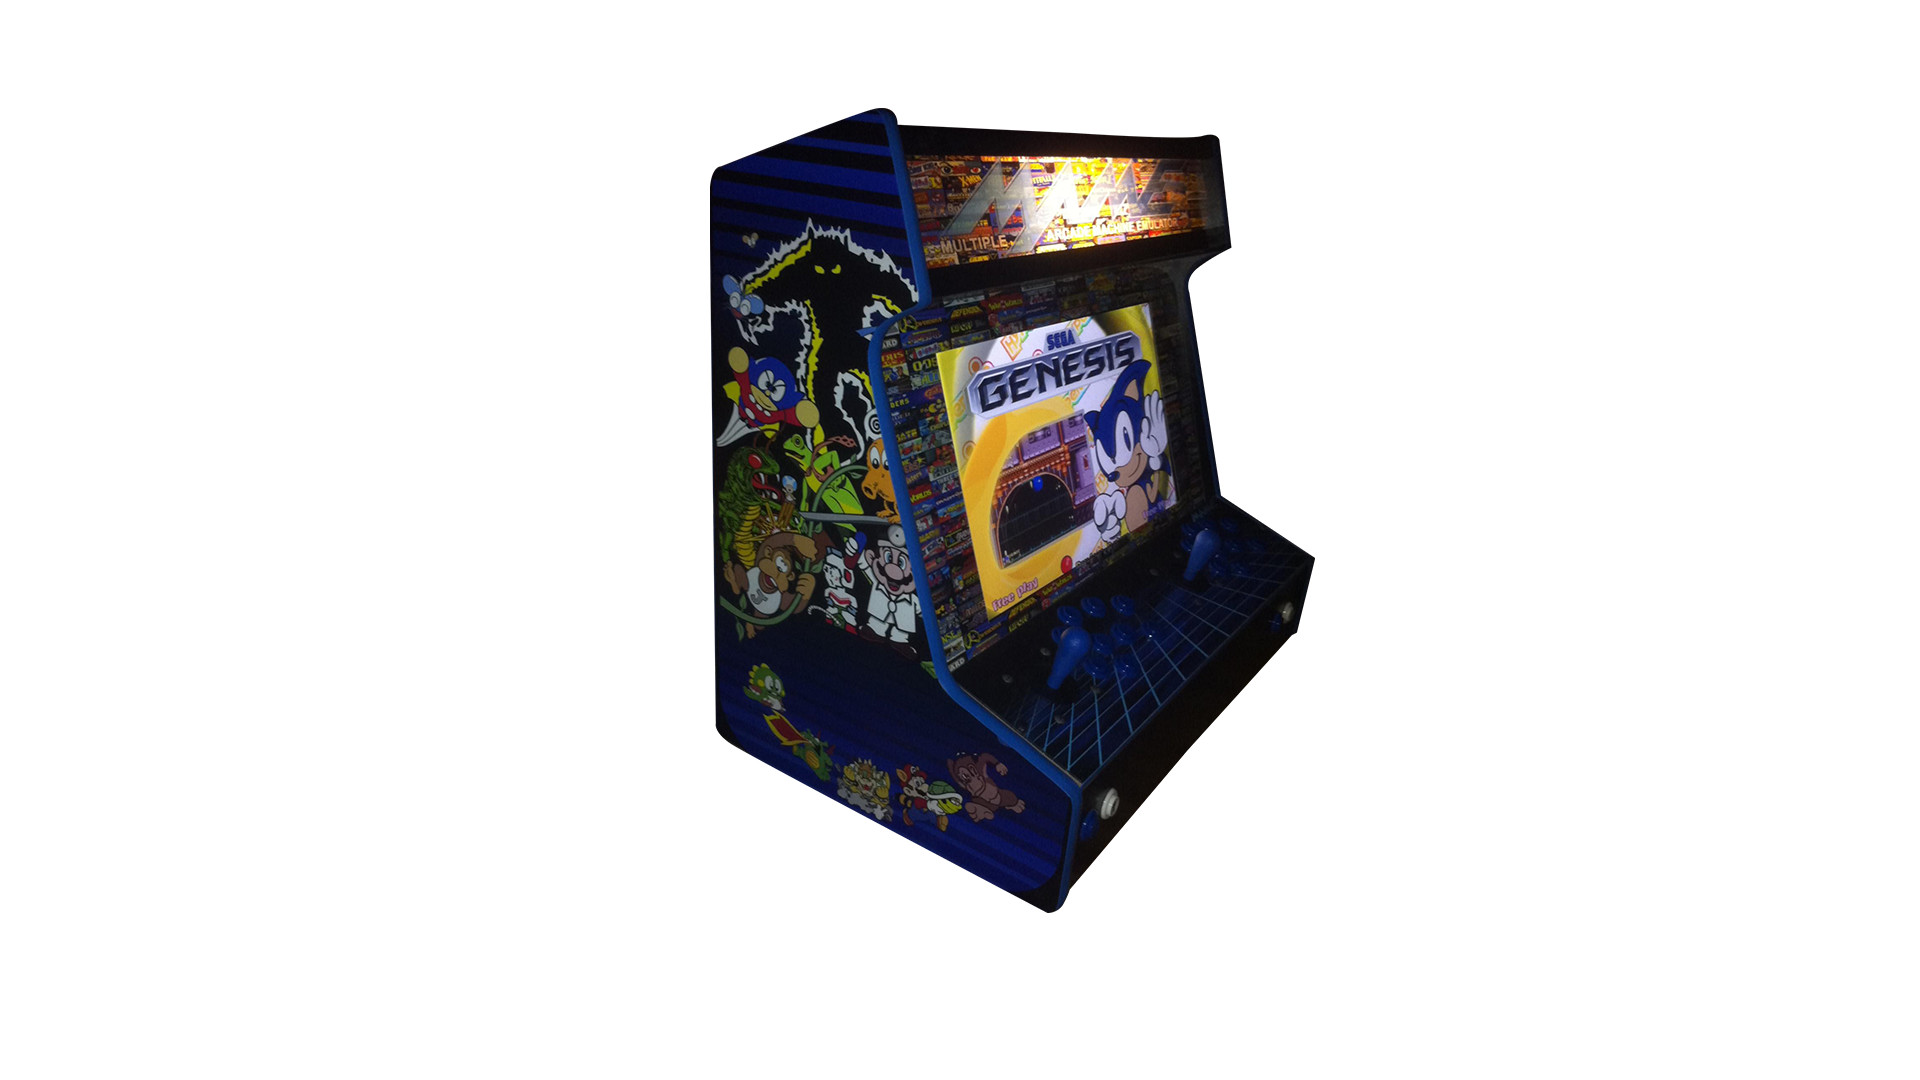 1920x1080 Classic Arcade Bartop Left Side-1080